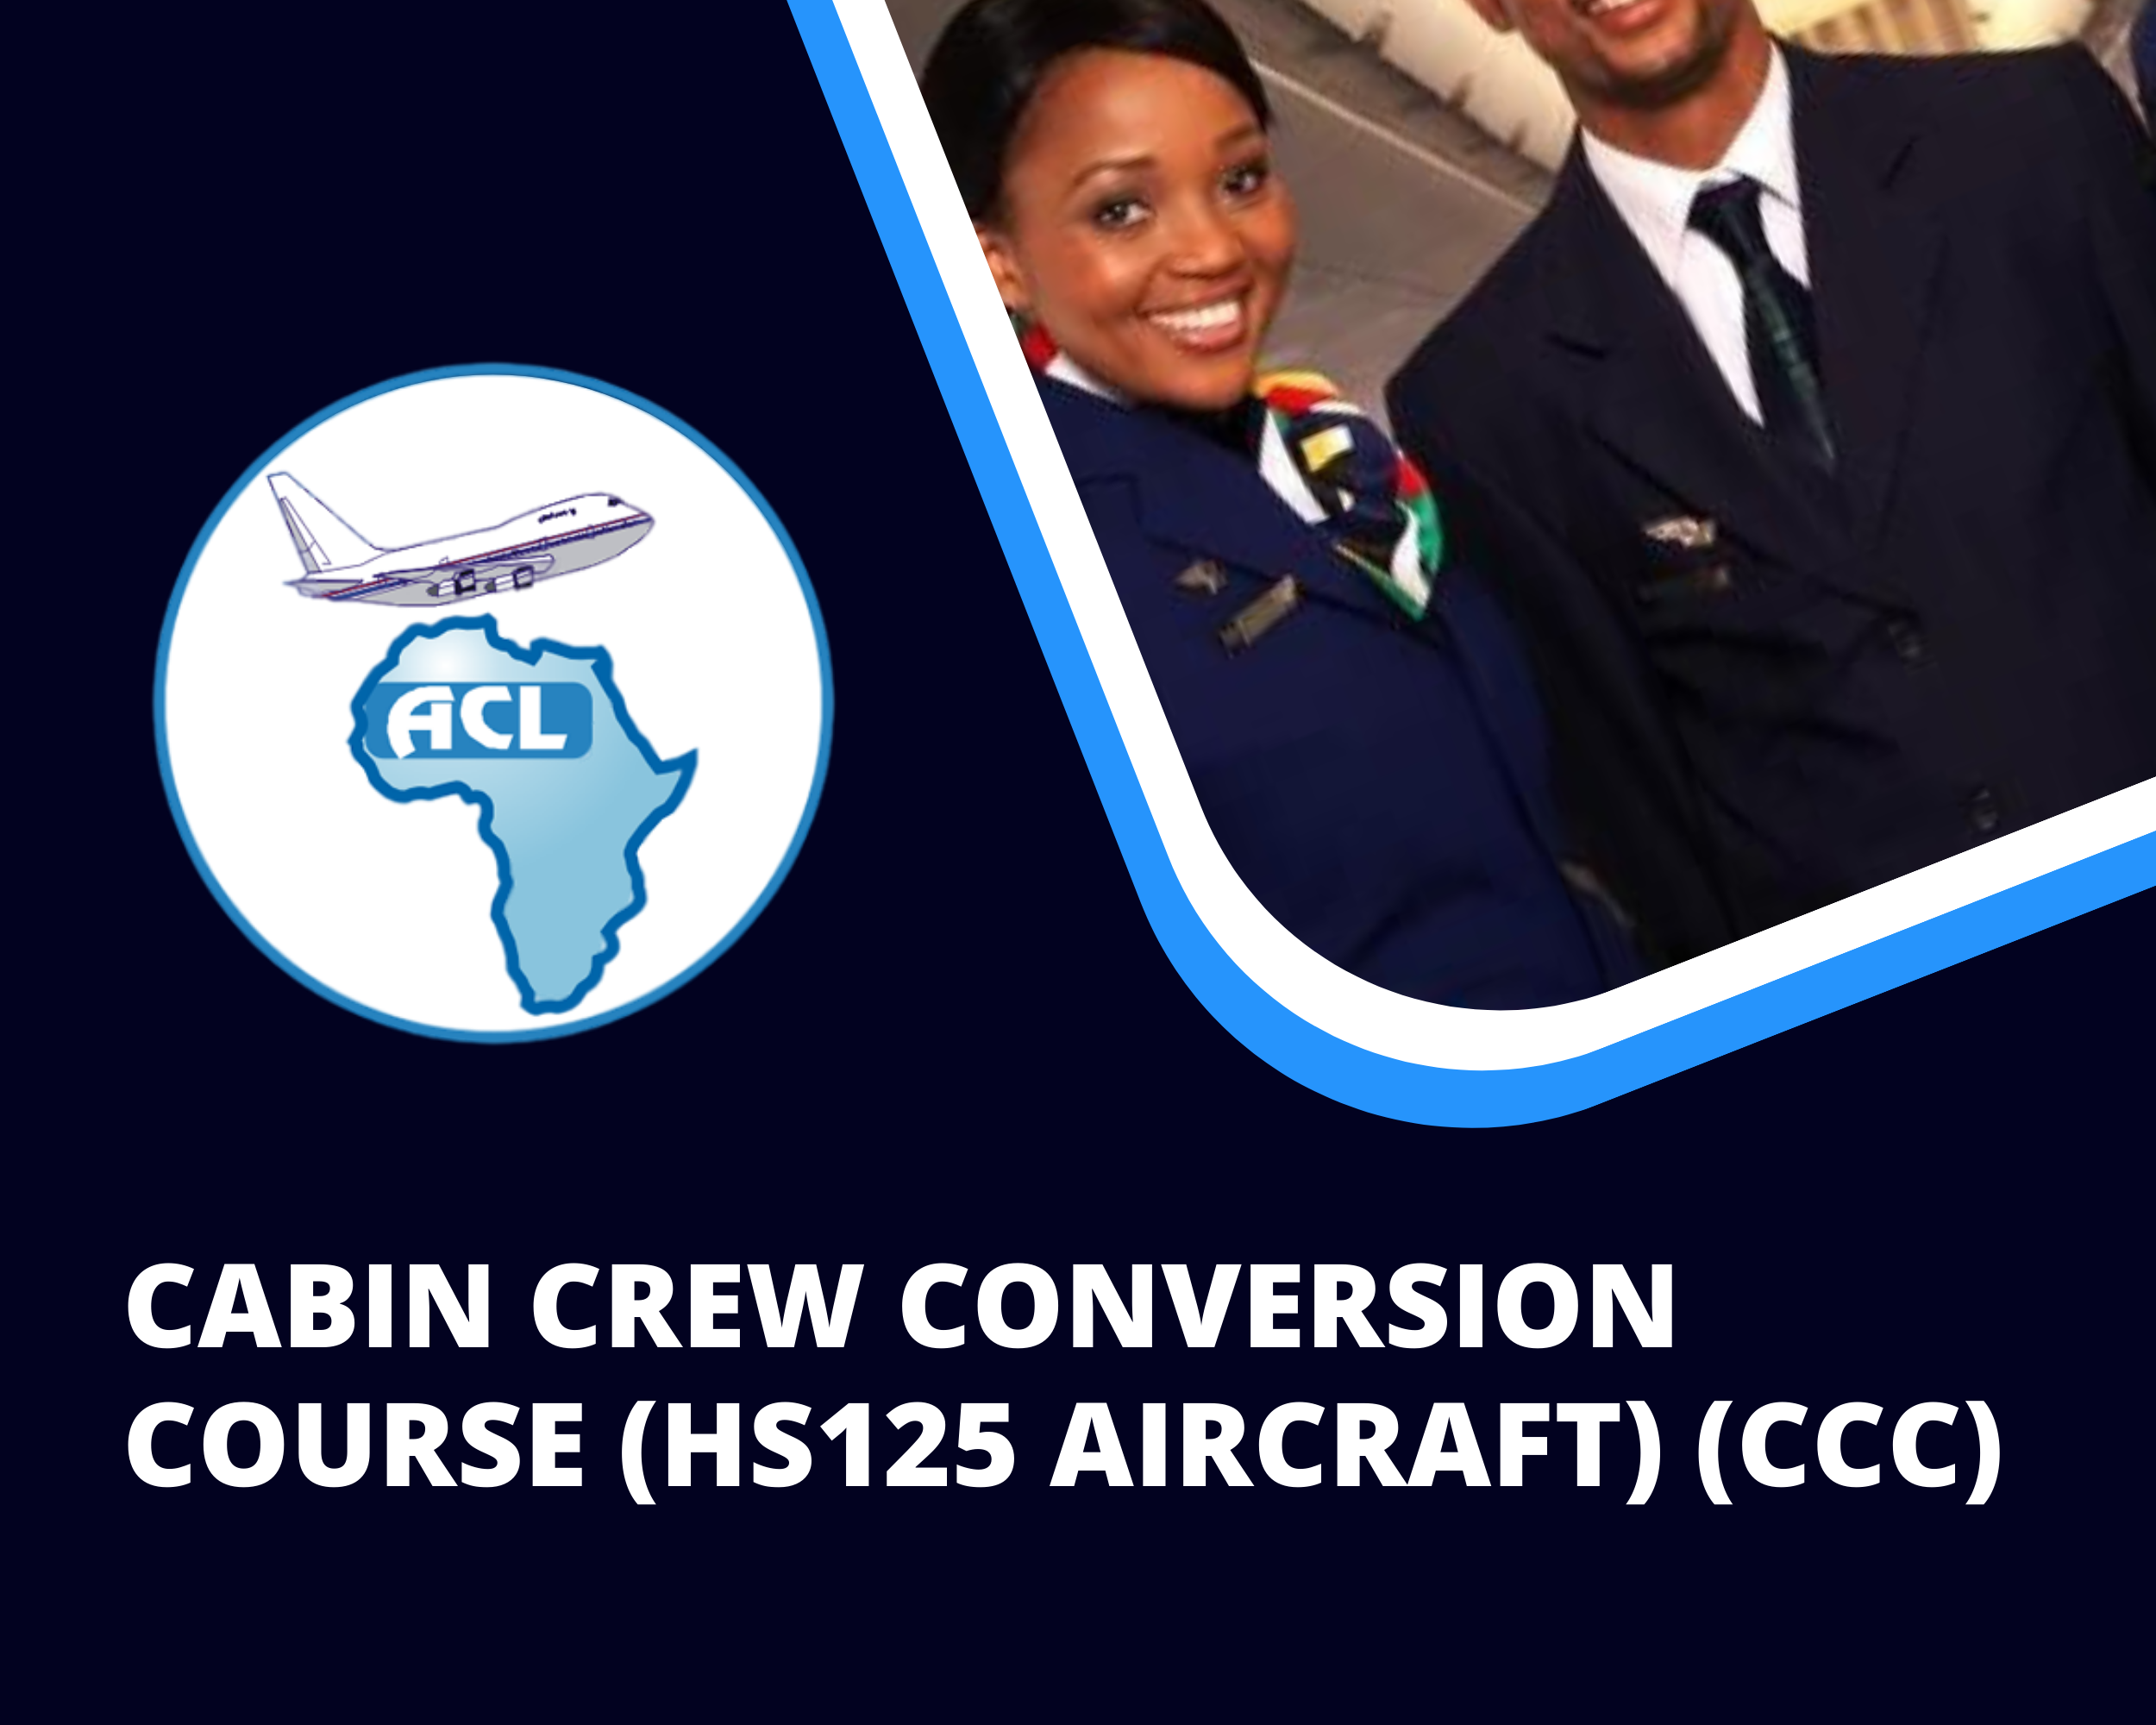 CABIN CREW CONVERSION COURSE (HS125 AIRCRAFT) (CCC)